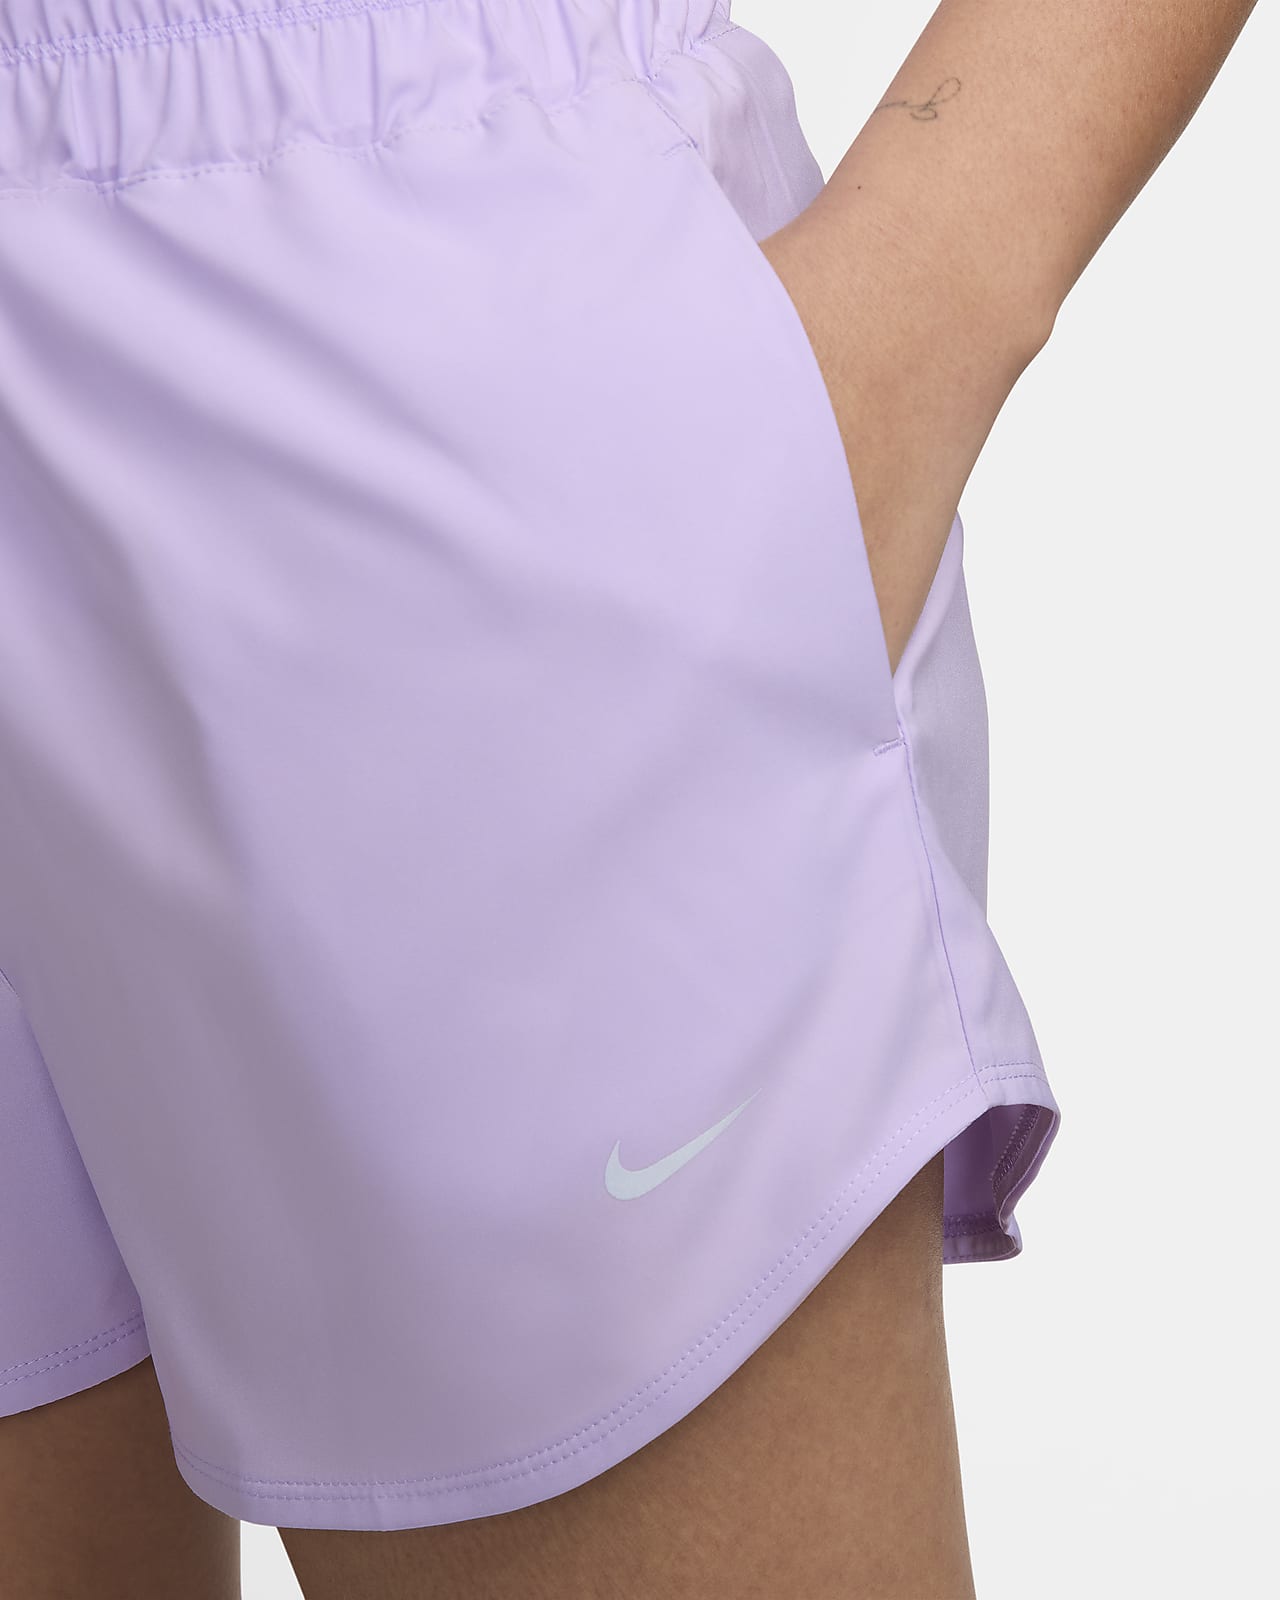 Womens Purple Nike Underwear, Clothing